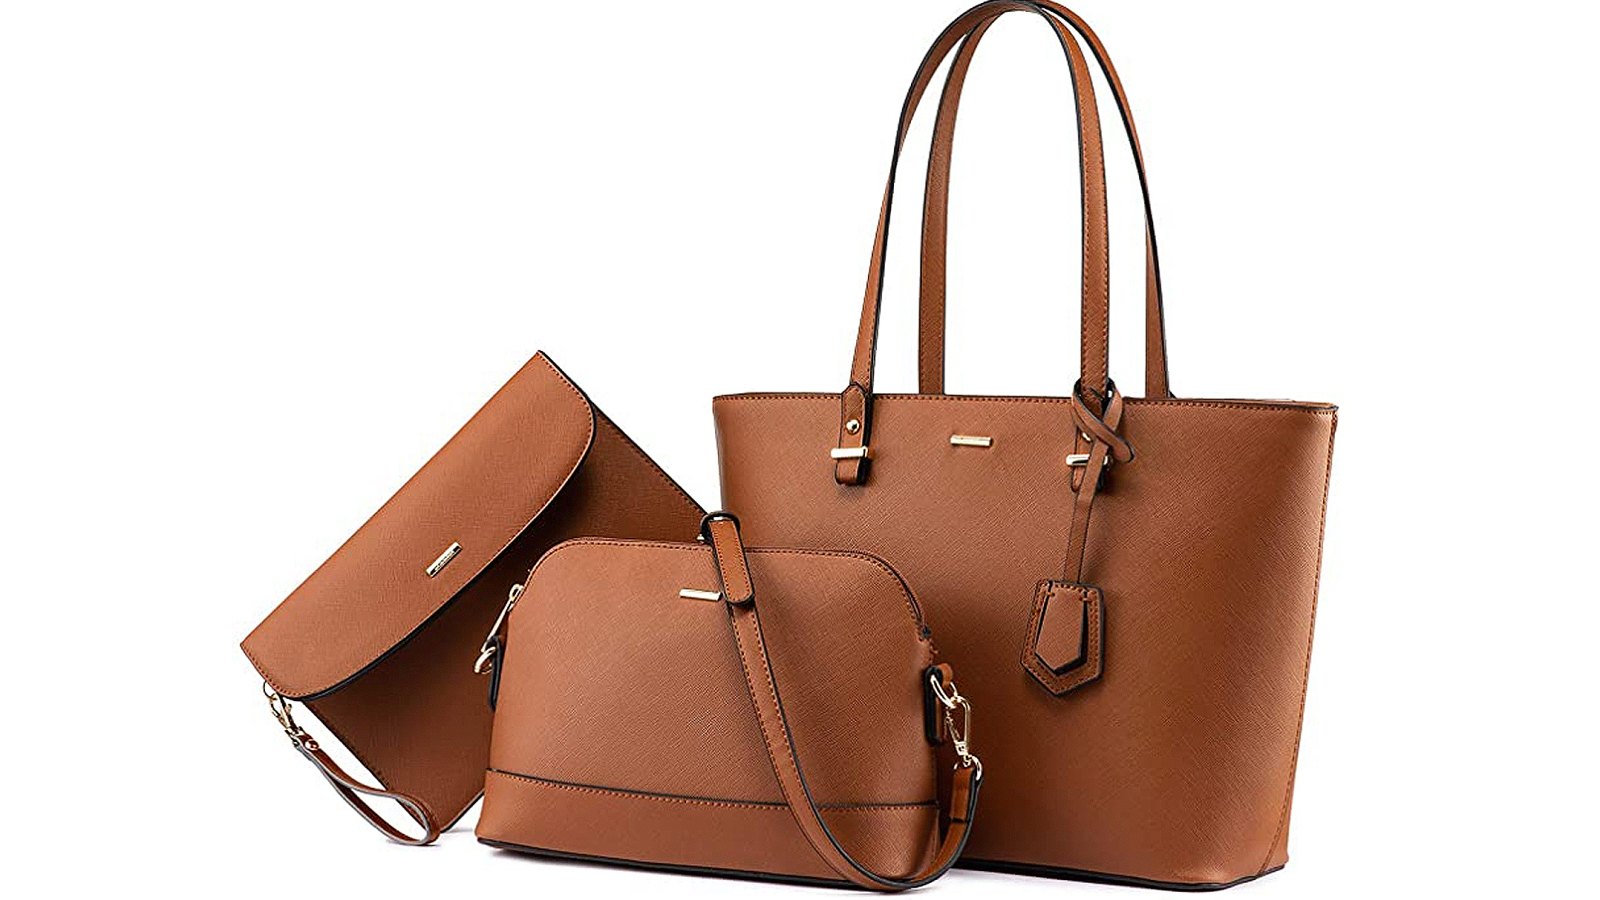 LOVEVOOK Handbags for Women Fashion Tote Bags Shoulder Bag Top Handle Satchel Purse Set